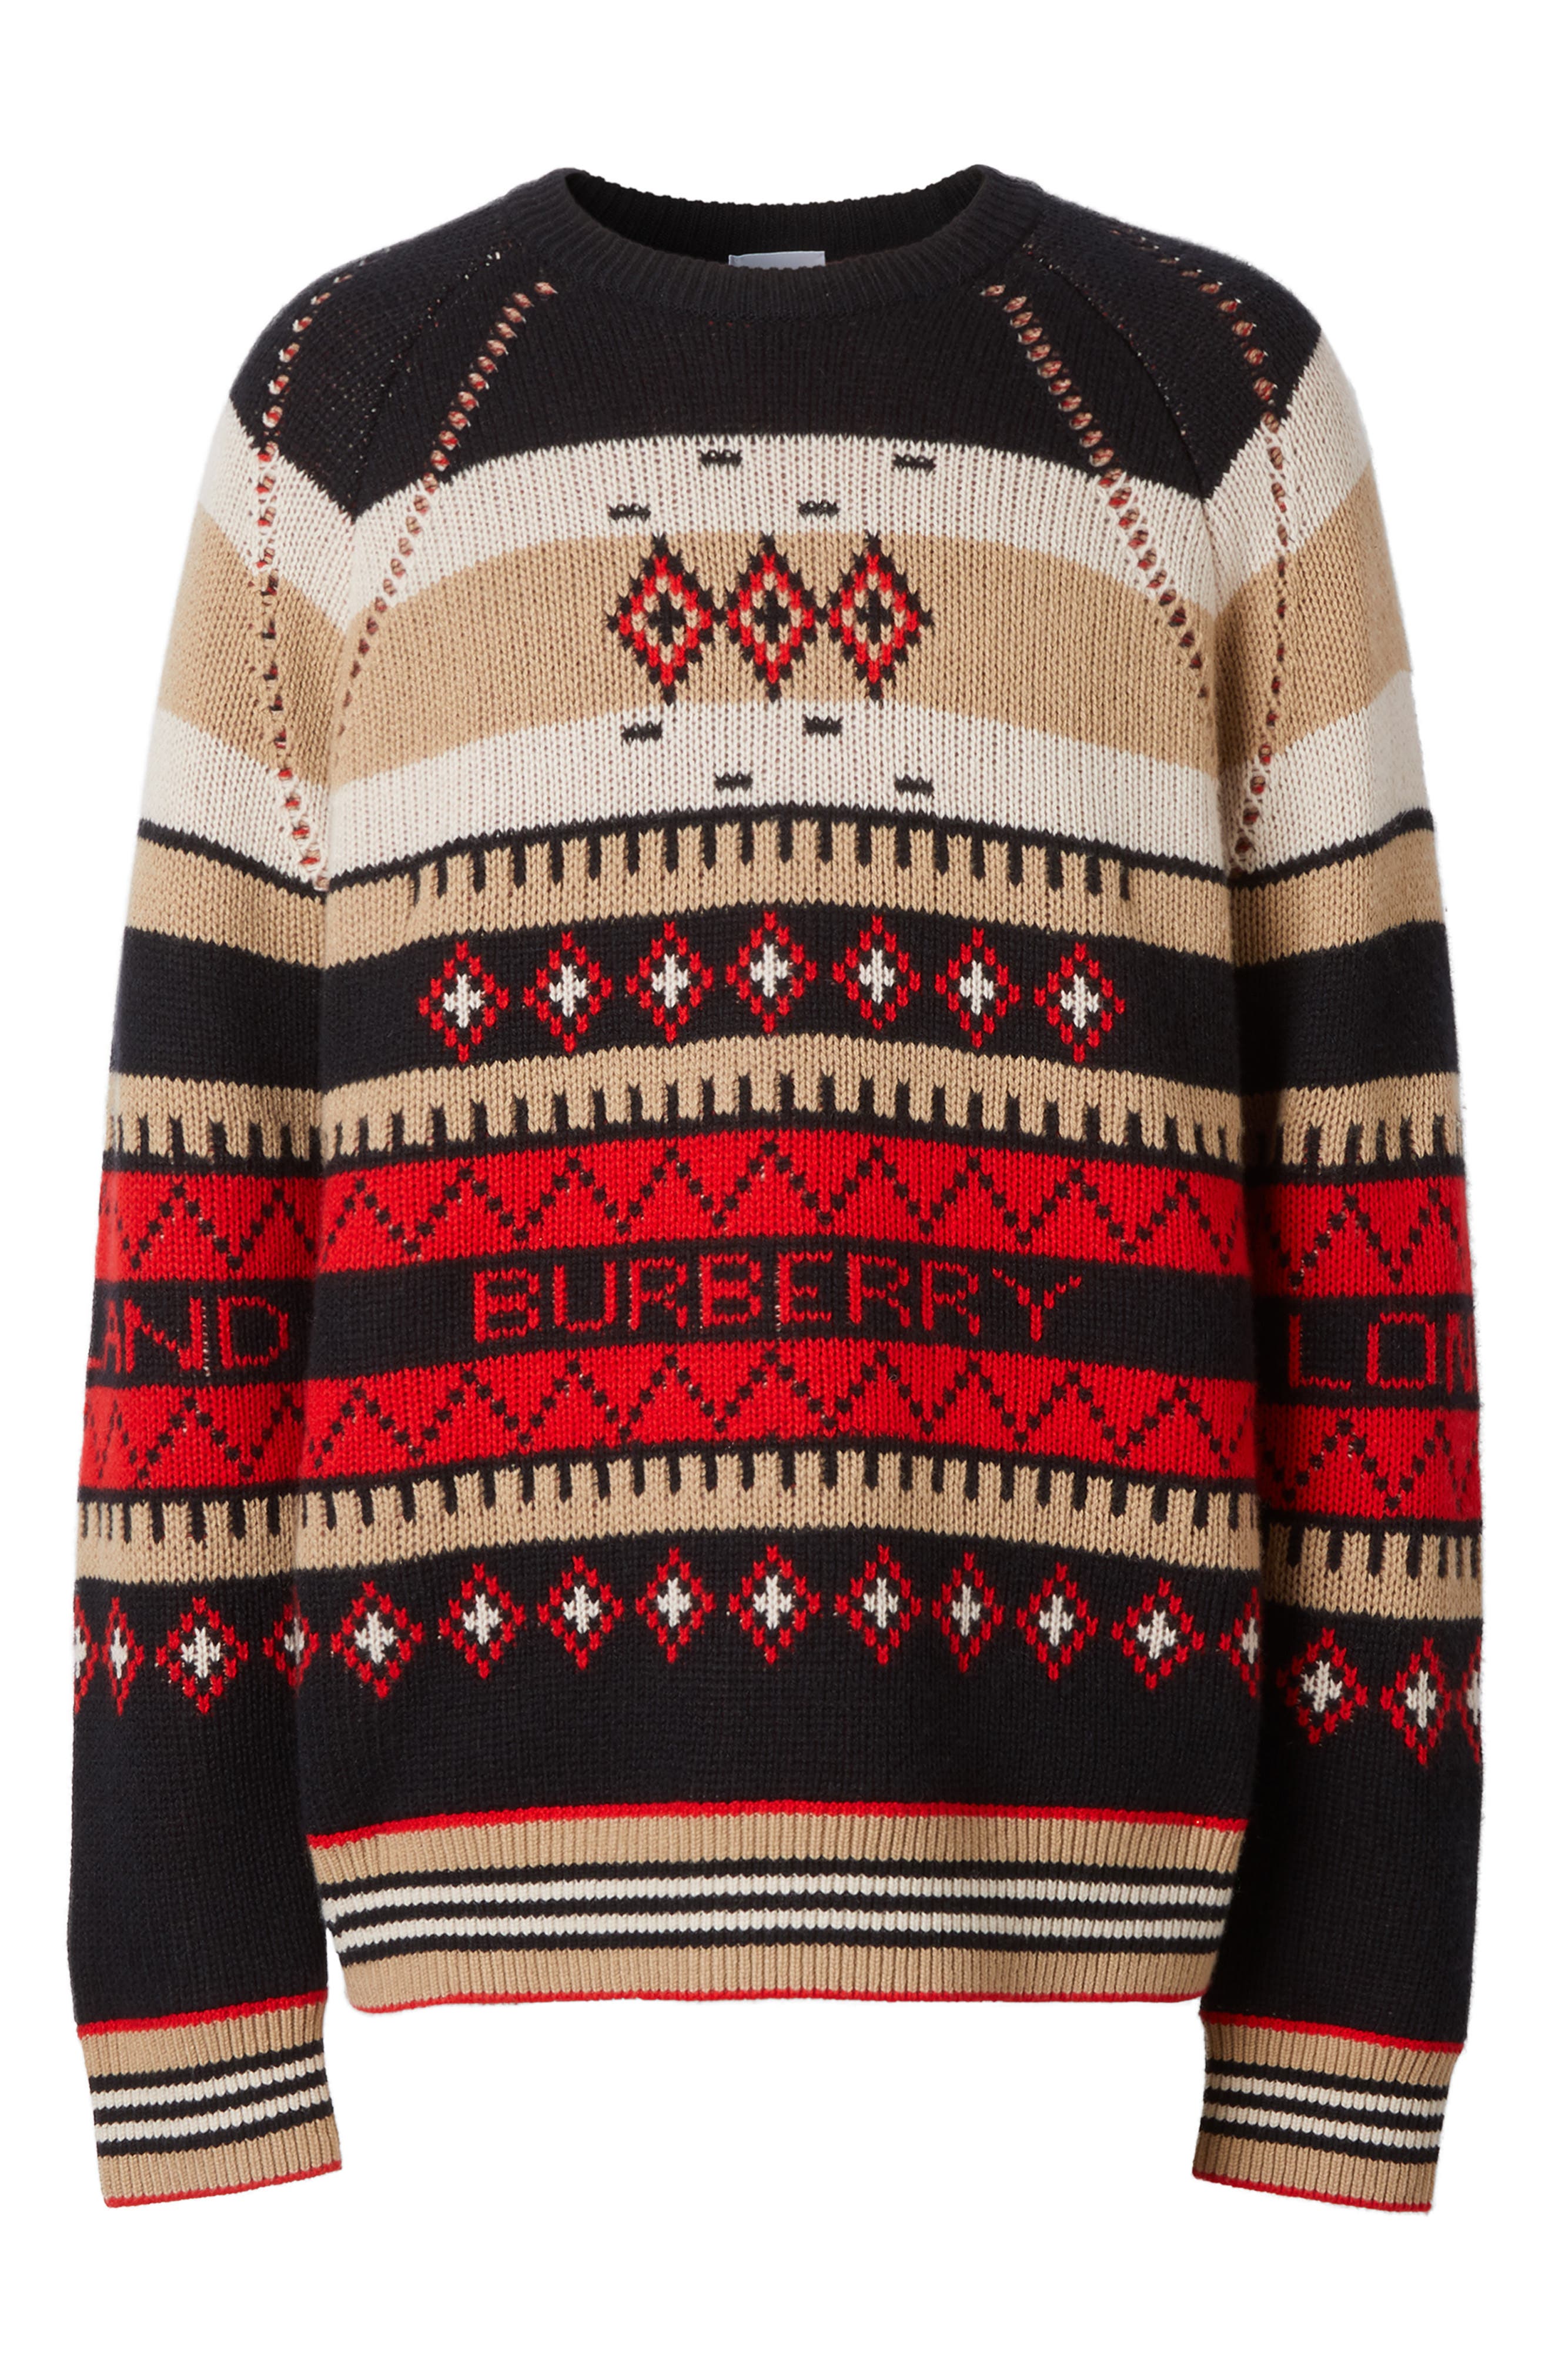 burberry sweater nordstrom